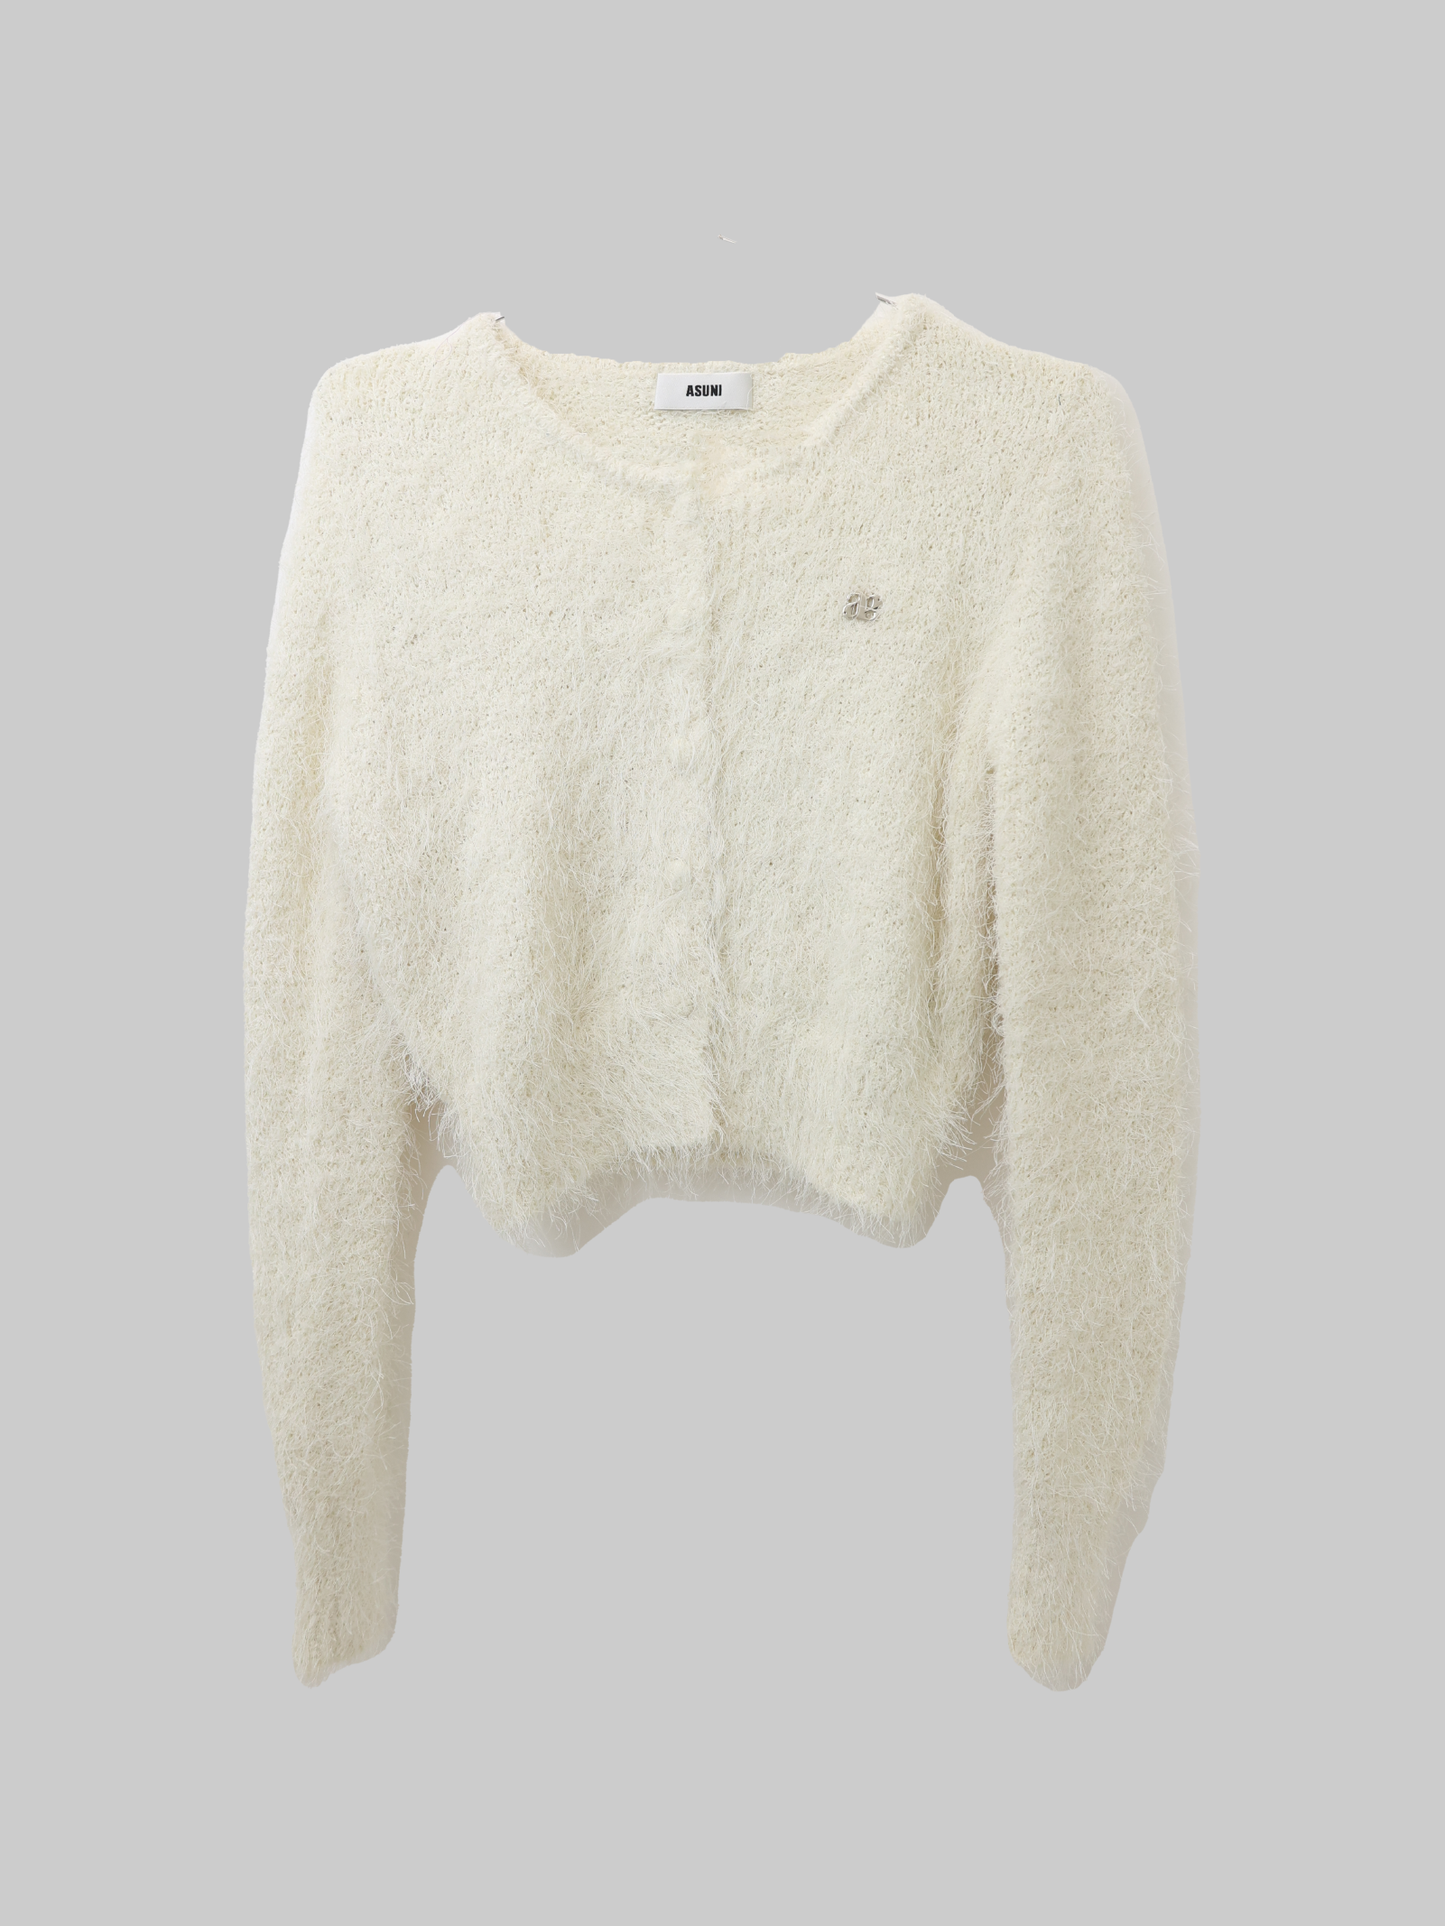 asuni Fluffy Knit Cardigan Sweater in white